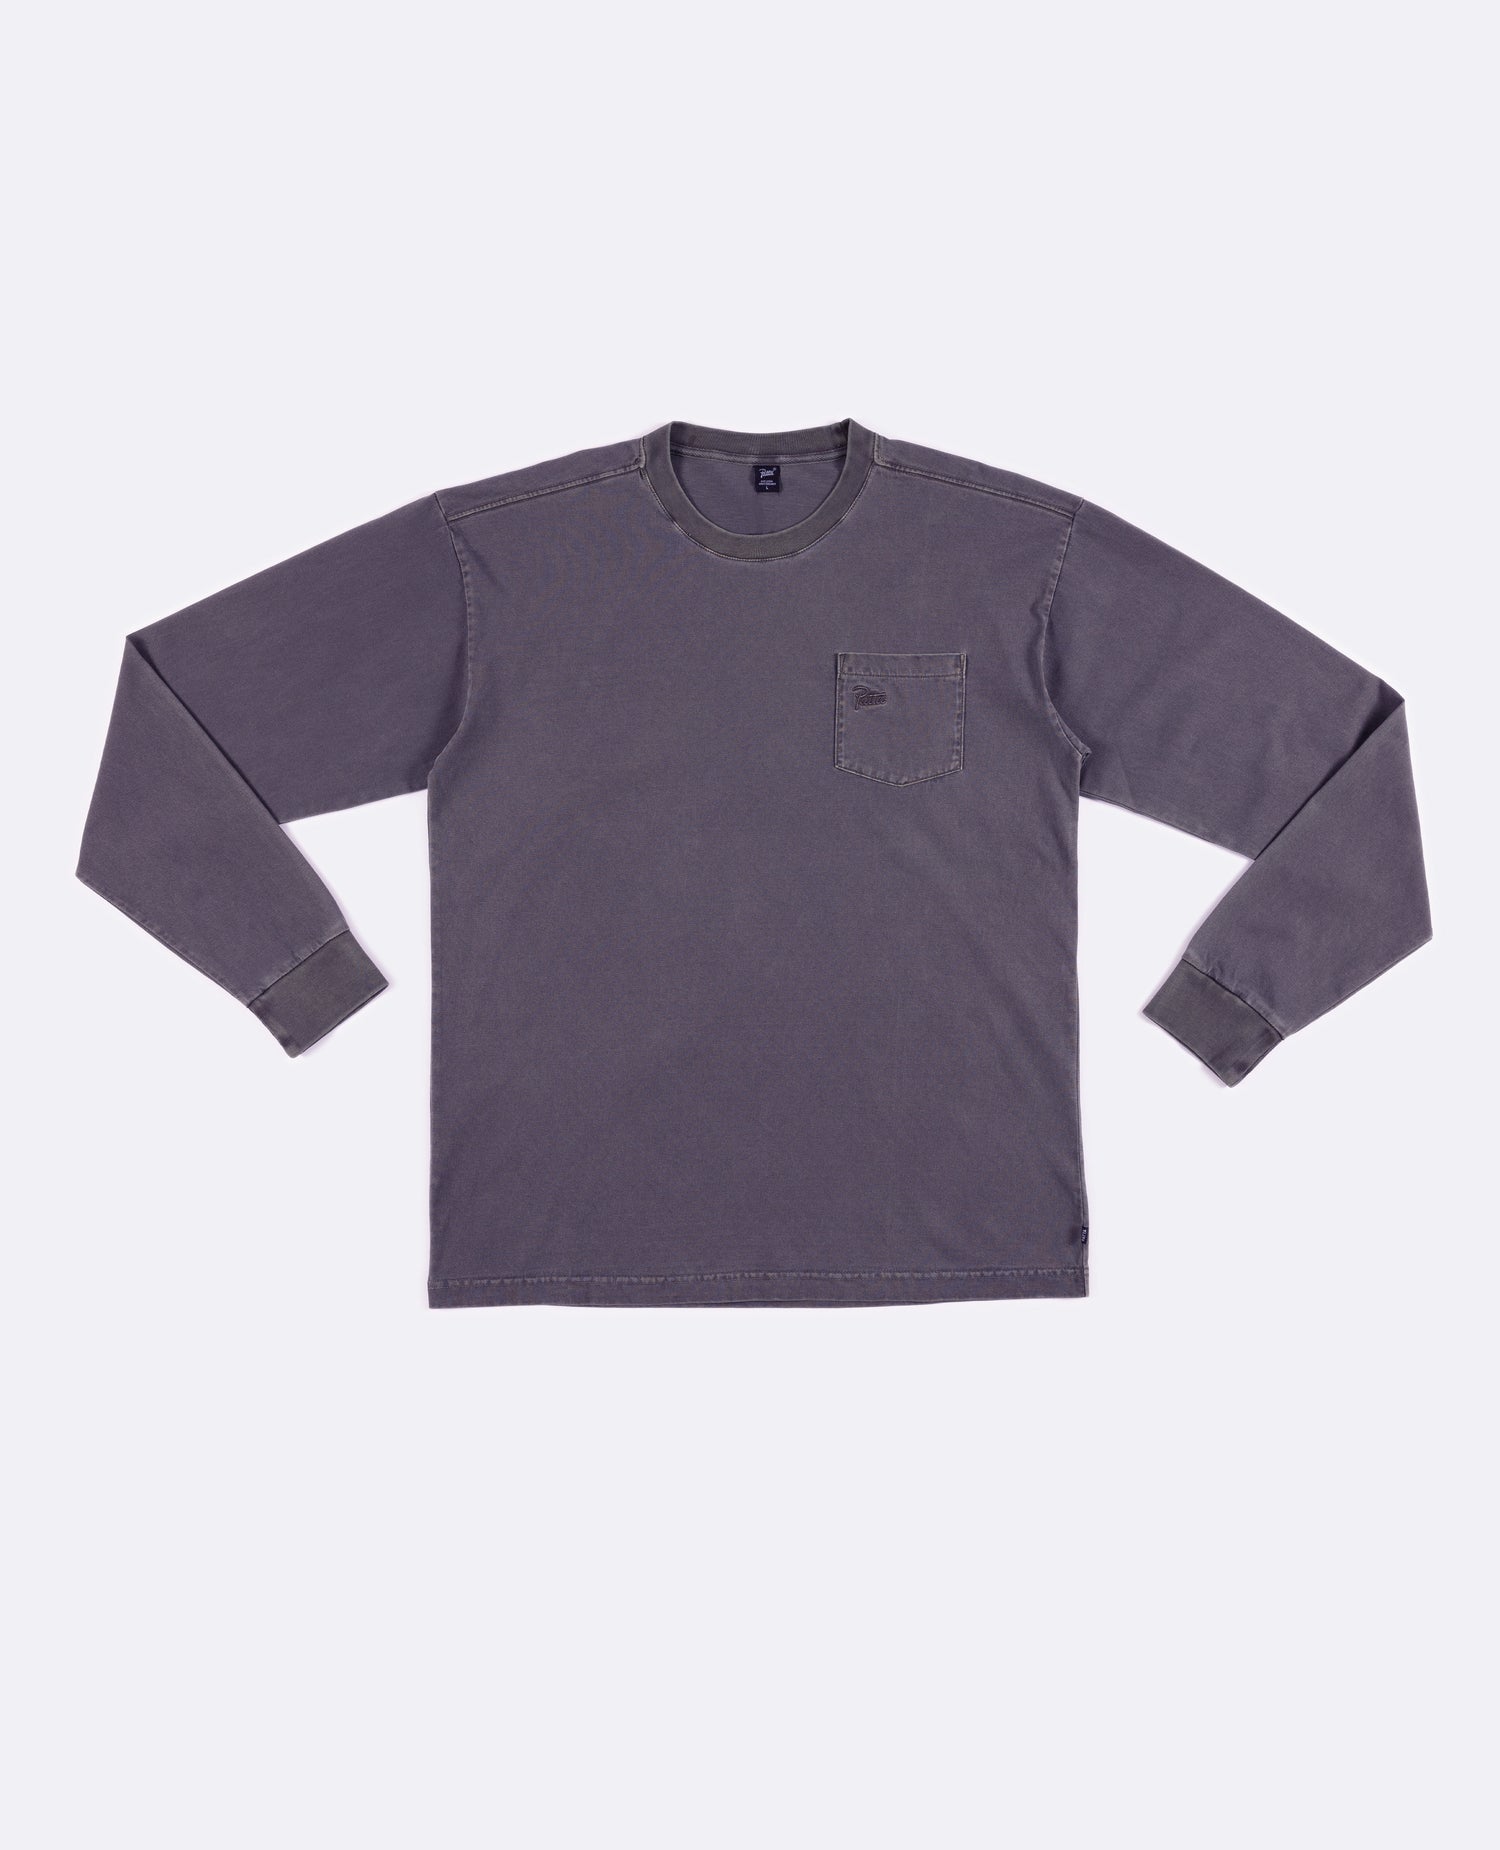 Patta Basic Washed Pocket Longsleeve T-Shirt (Odyssey Gray)